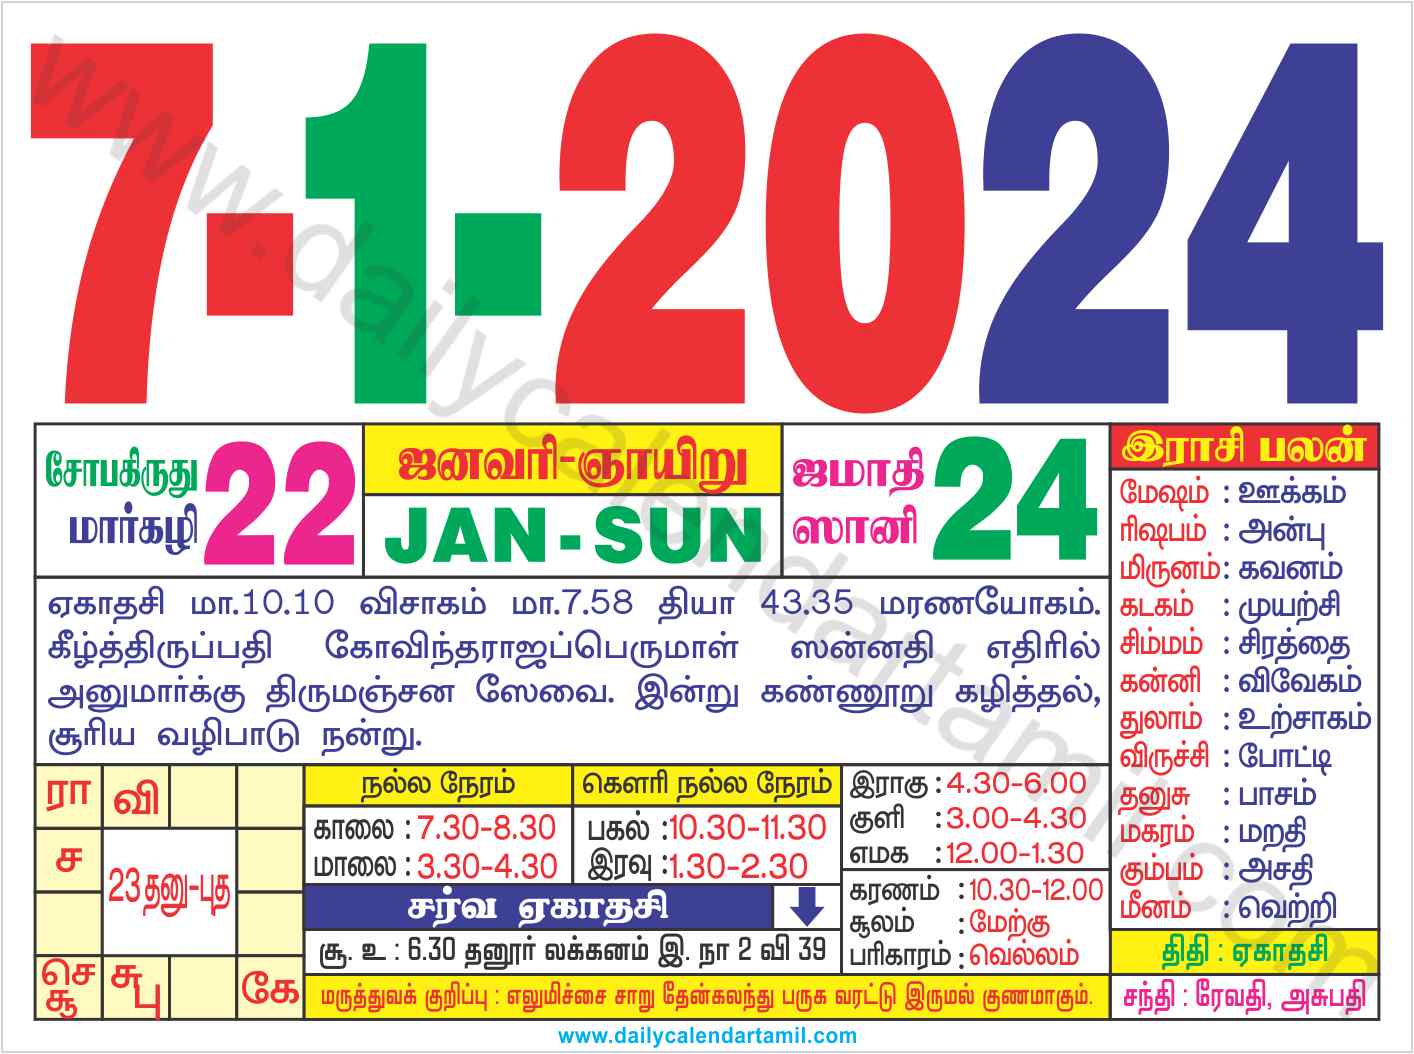 Tamil New Year 2022 Auspicious Times Malaysia